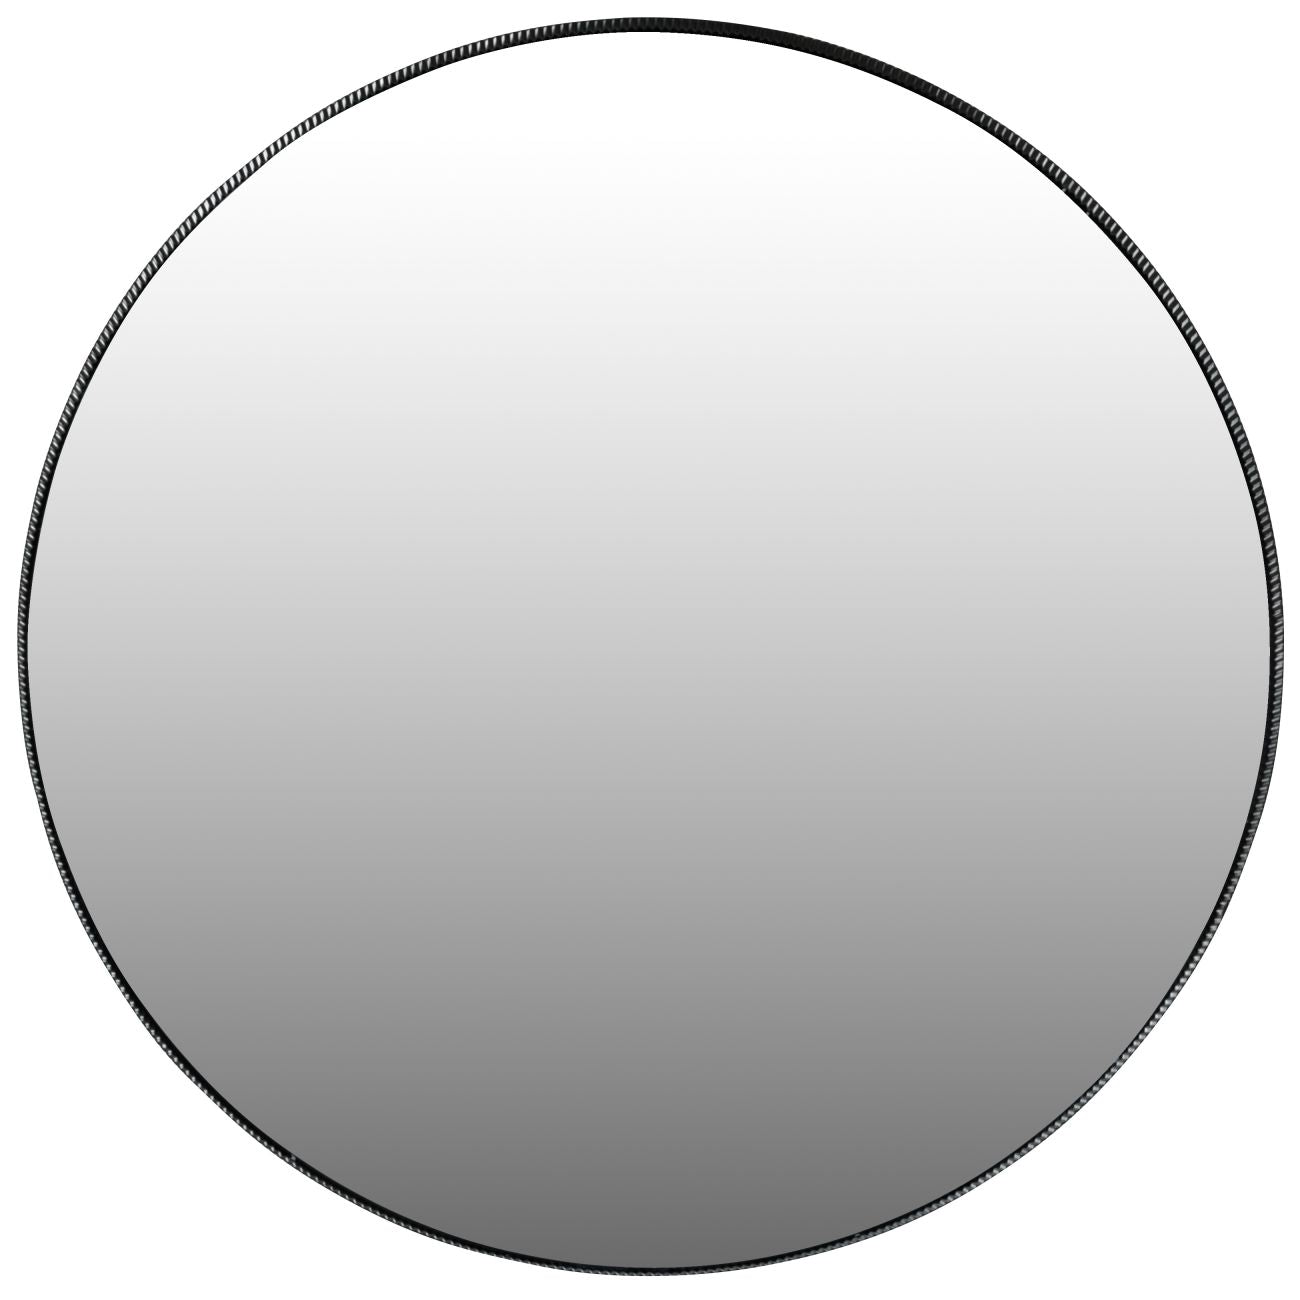 Knightsbridge Round Mirror - Dark Bronze Finish - 80cm diameter